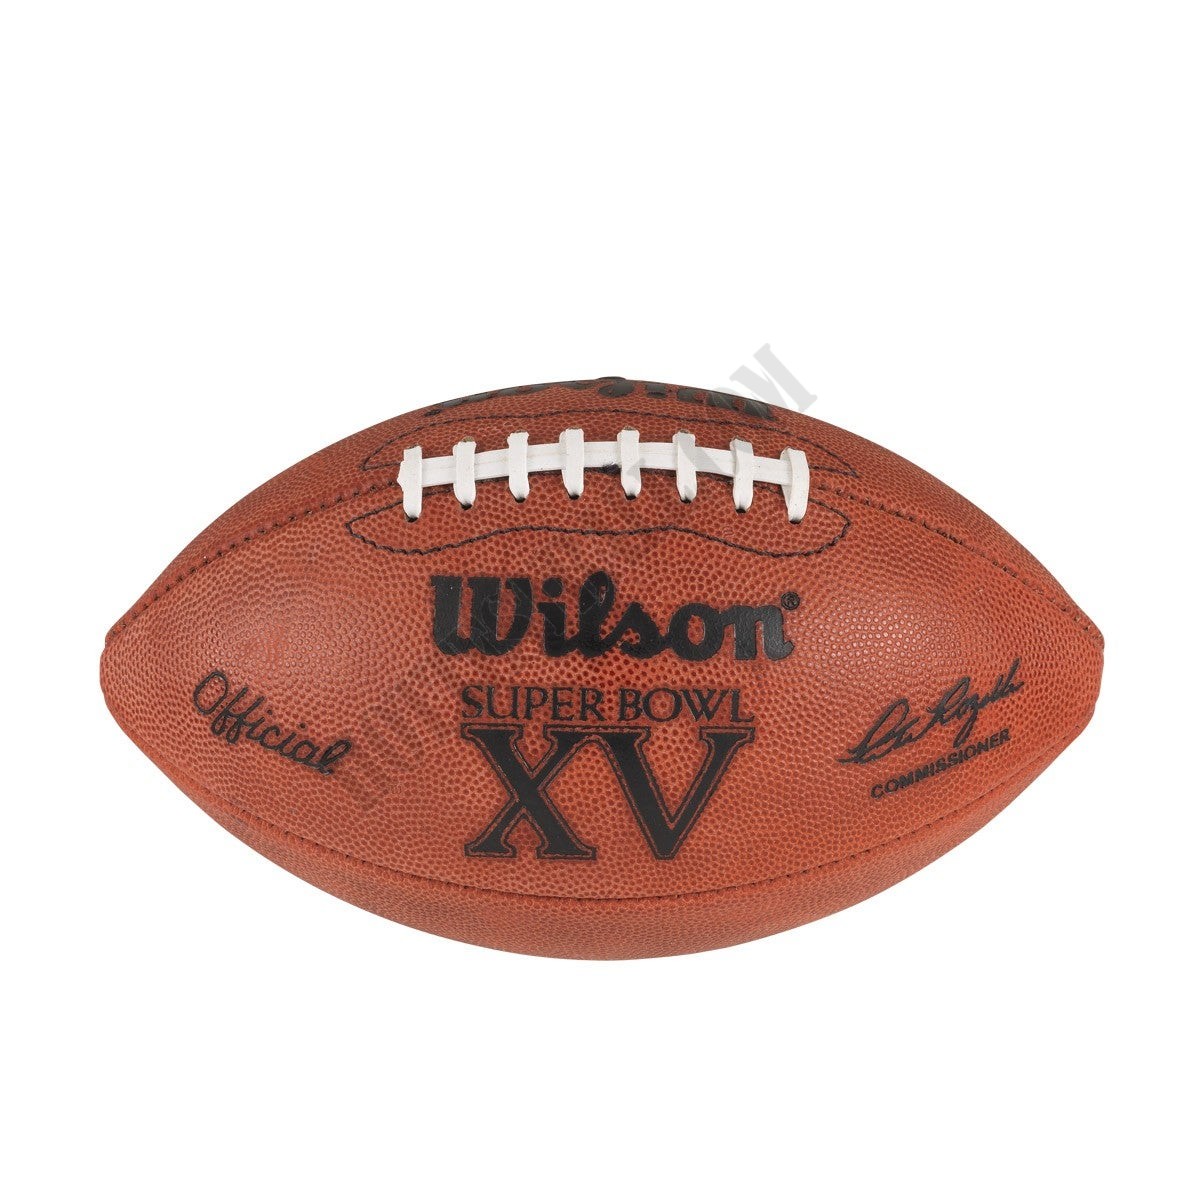 Super Bowl XV Game Football - Oakland Raiders ● Wilson Promotions - Super Bowl XV Game Football - Oakland Raiders ● Wilson Promotions